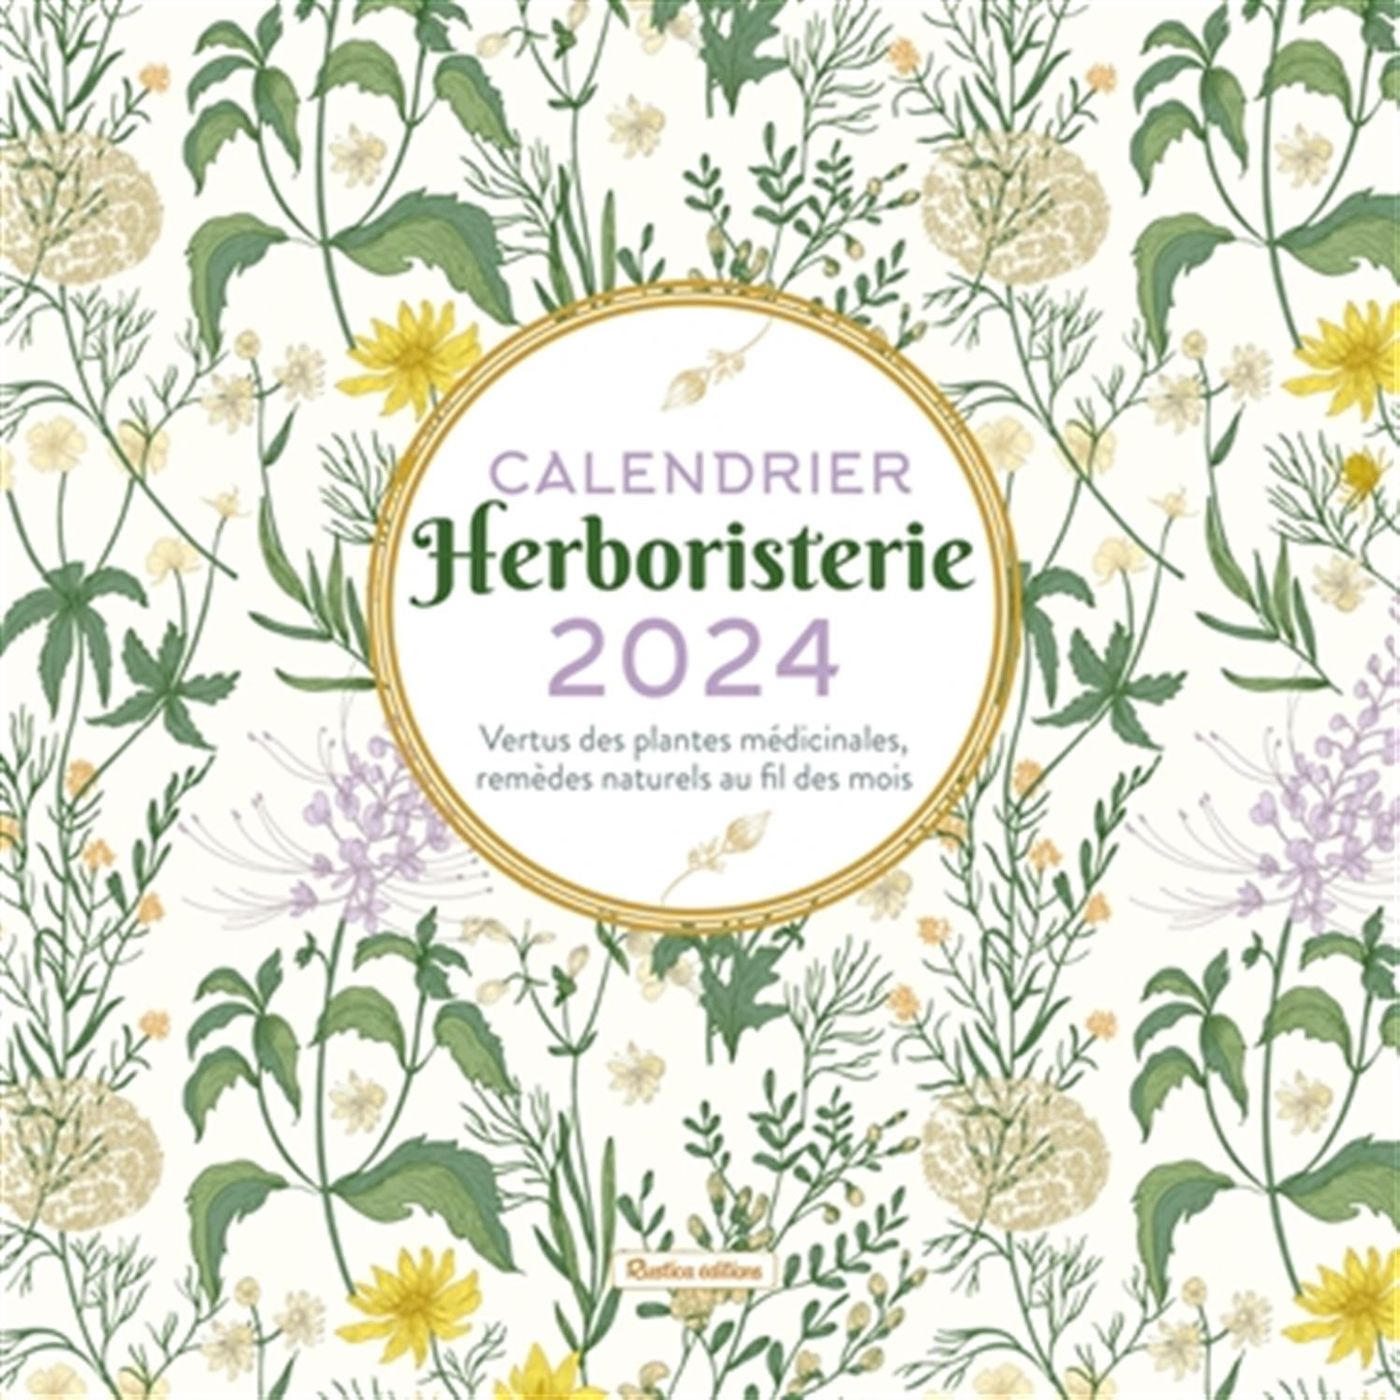 Calendrier mural herboristerie 2024